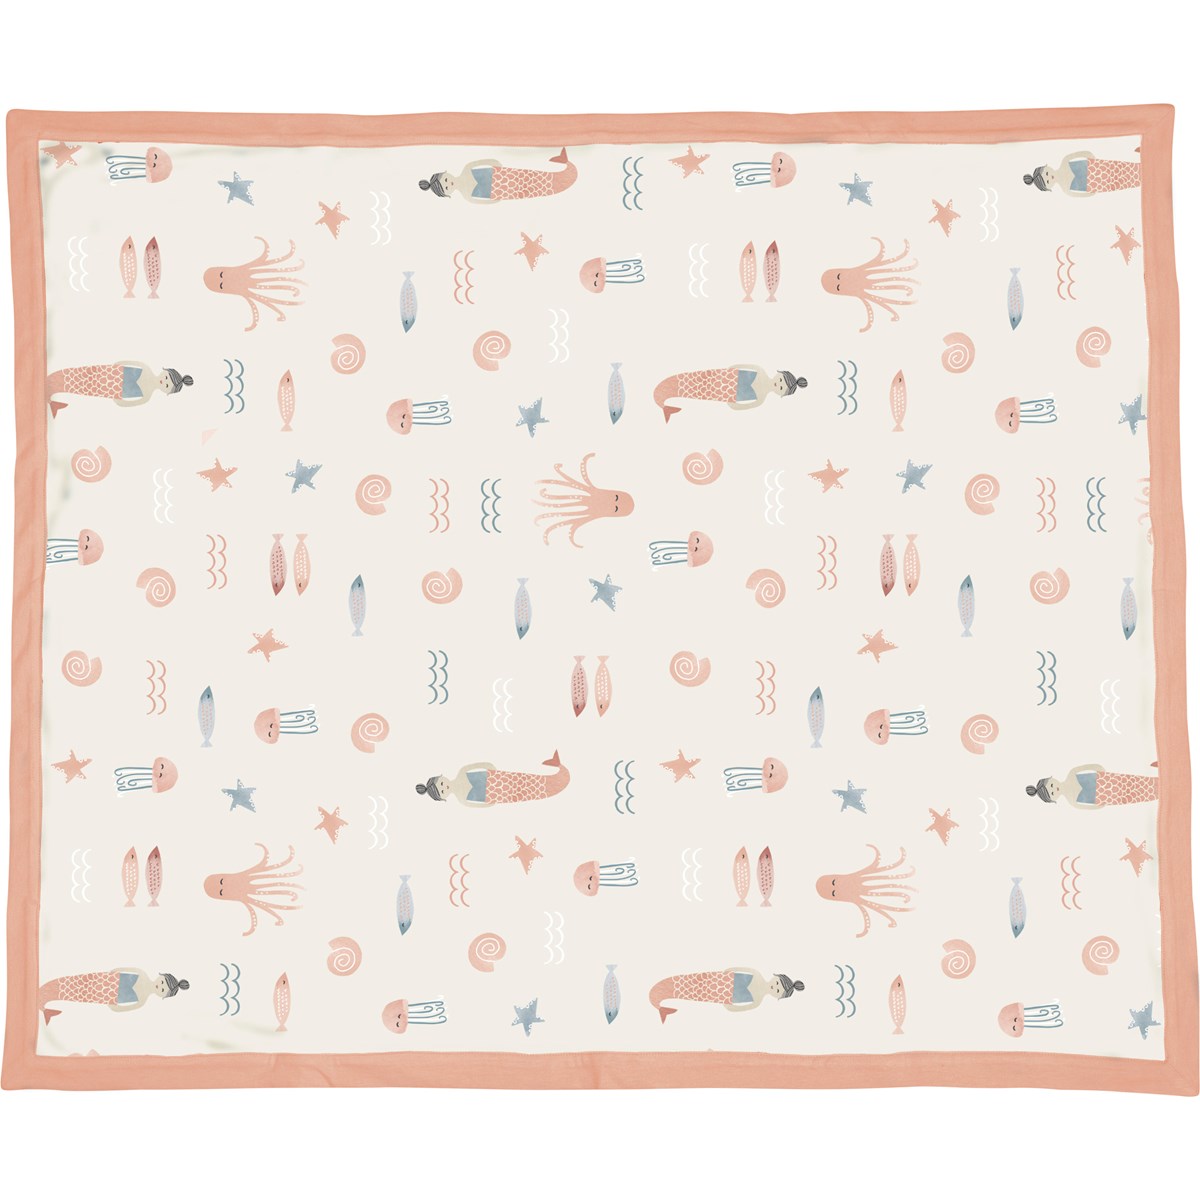 'Under the Sea' Blanket - Pink